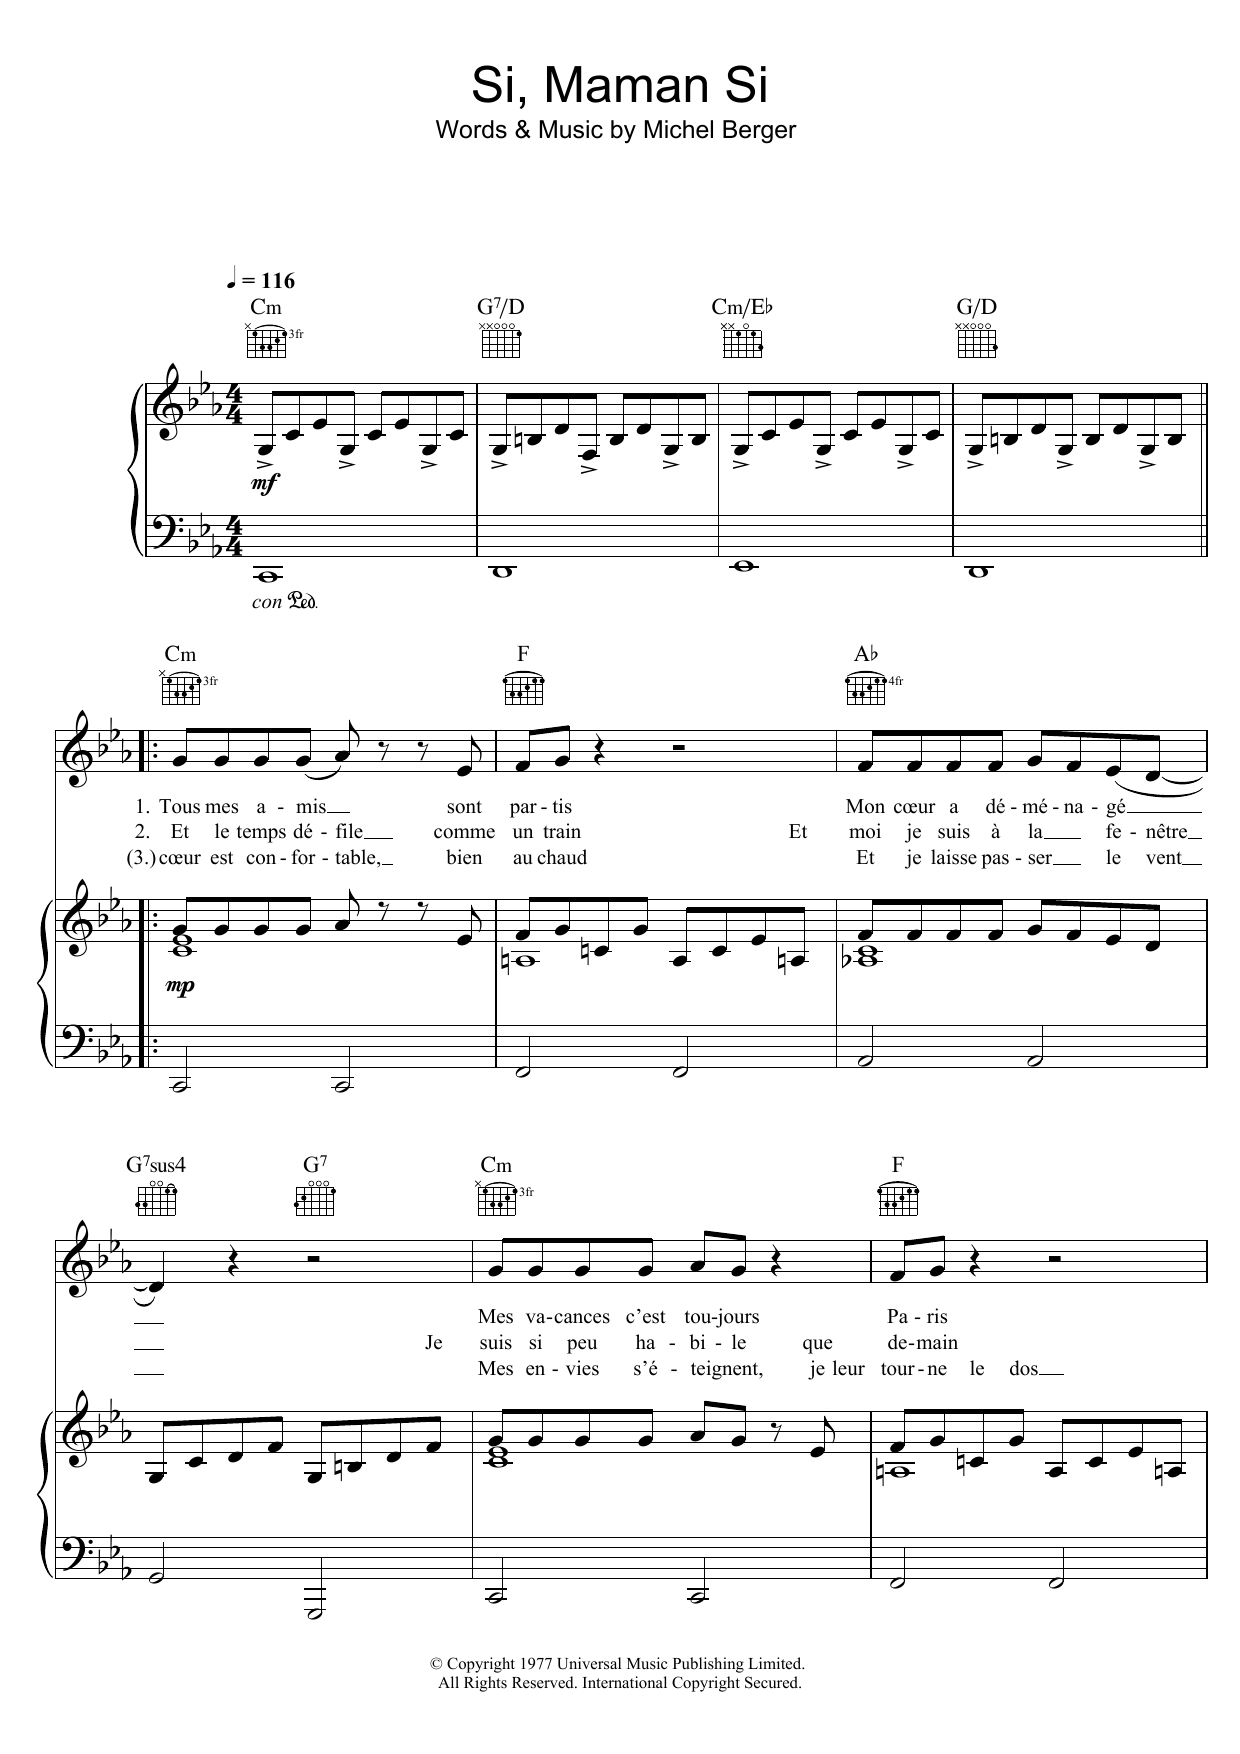 France Gall "Si, Maman Si" Sheet Music Chords | Pop Score Piano, Vocal & Guitar (Right-Hand Melody) Download Printable. SKU: 125540